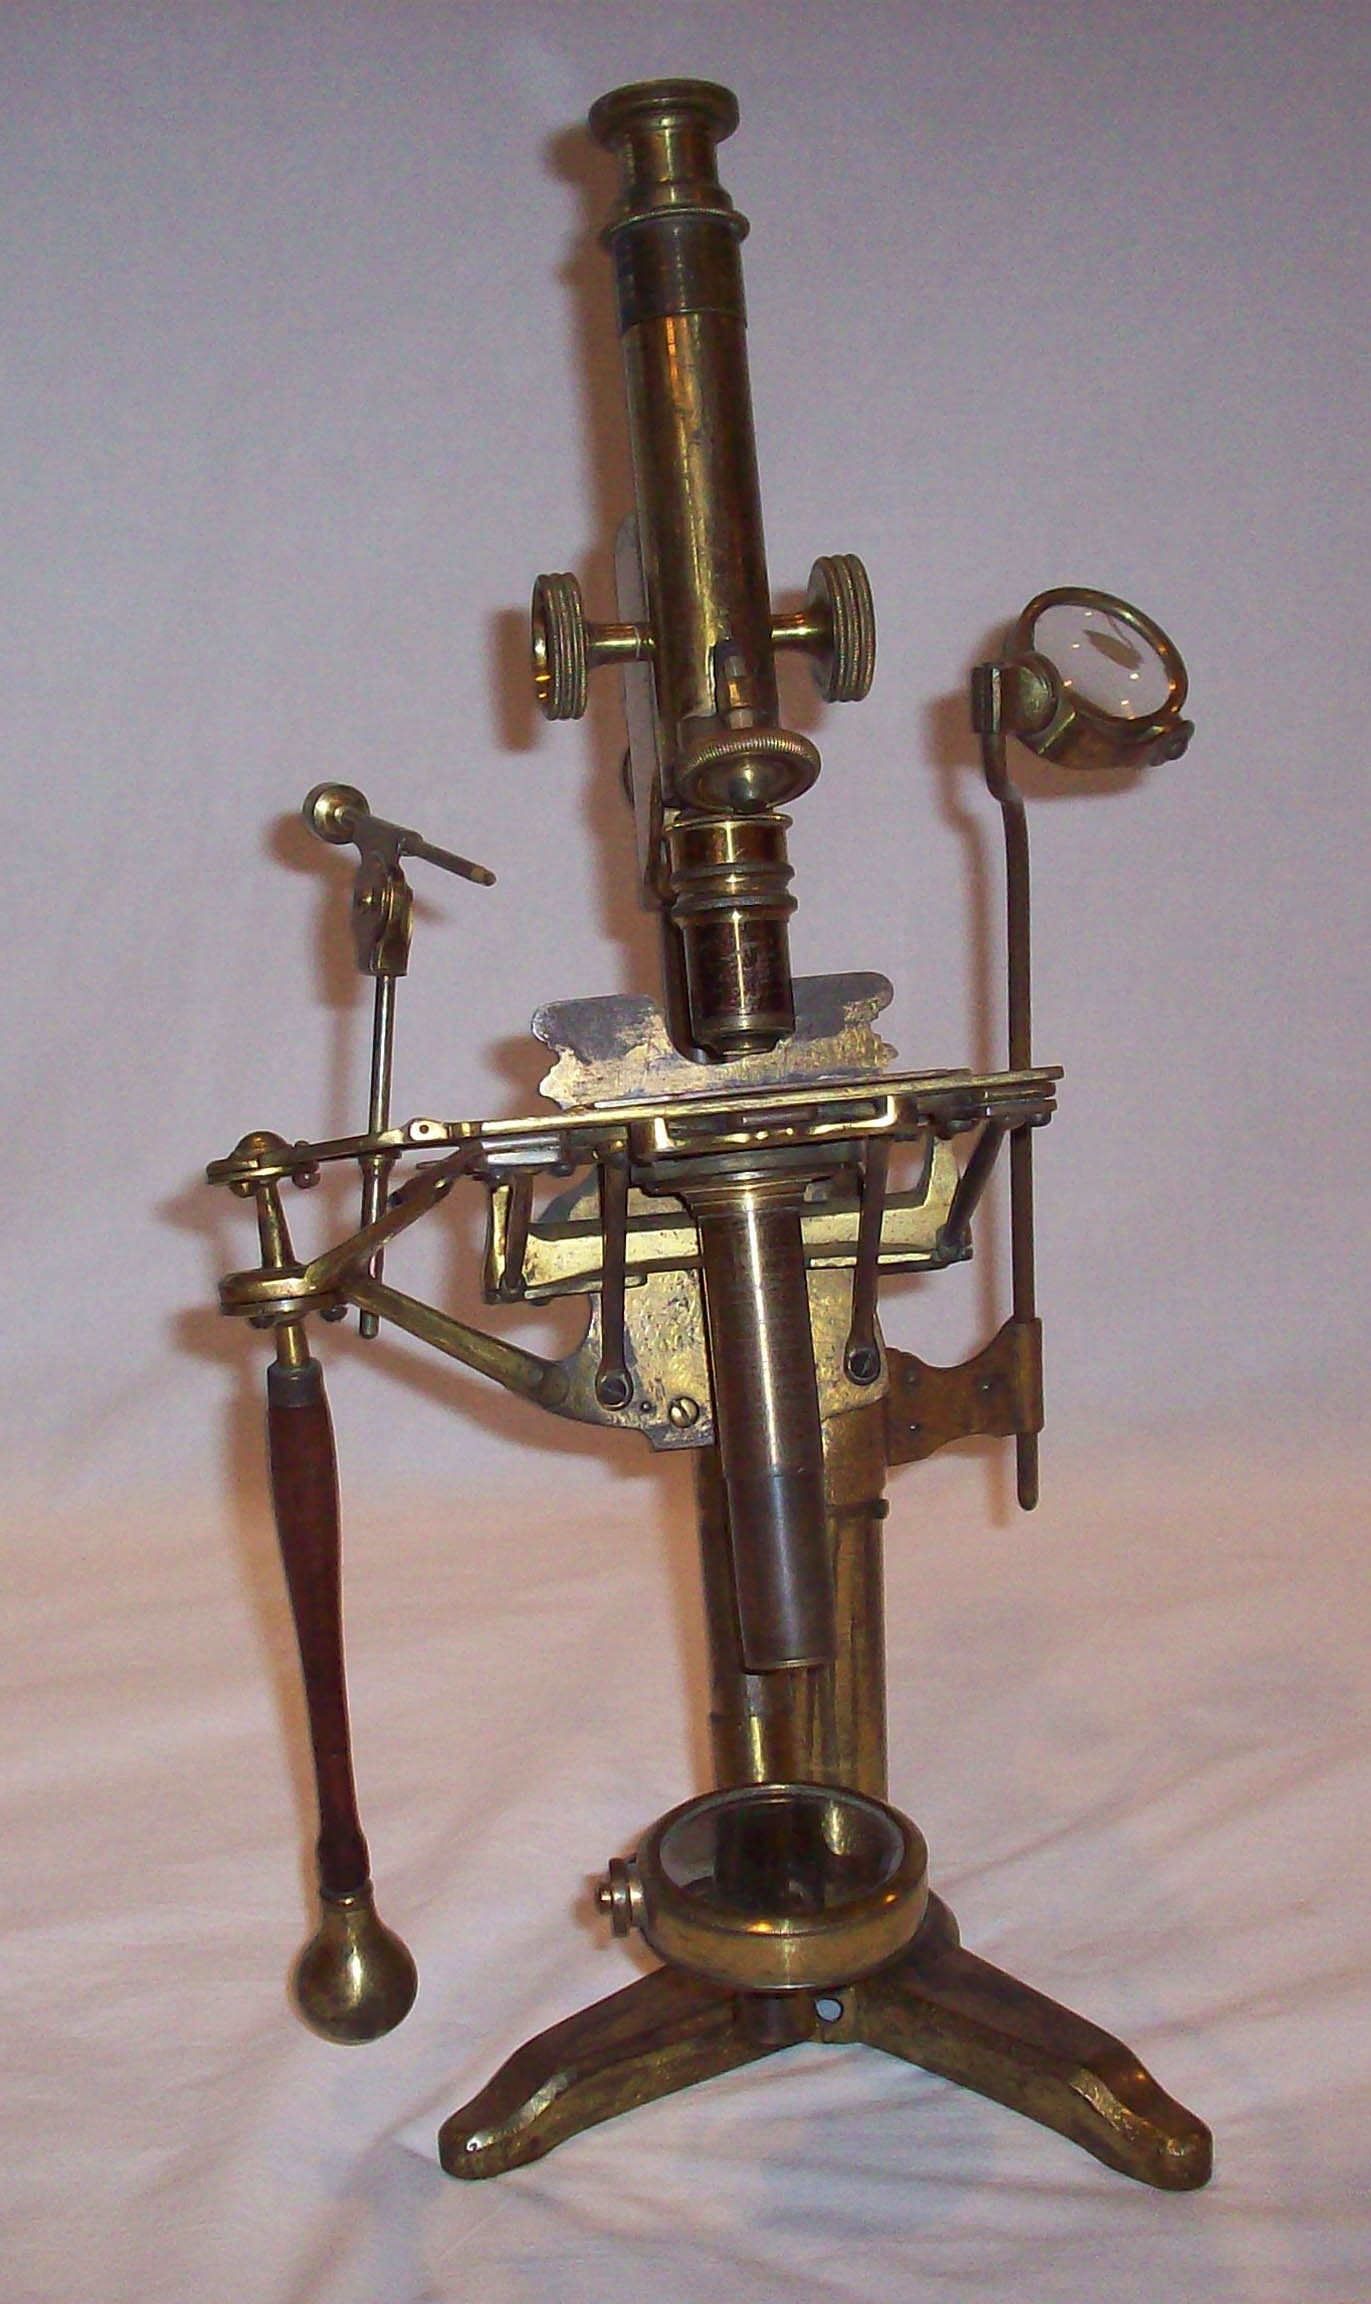 Varley microscope